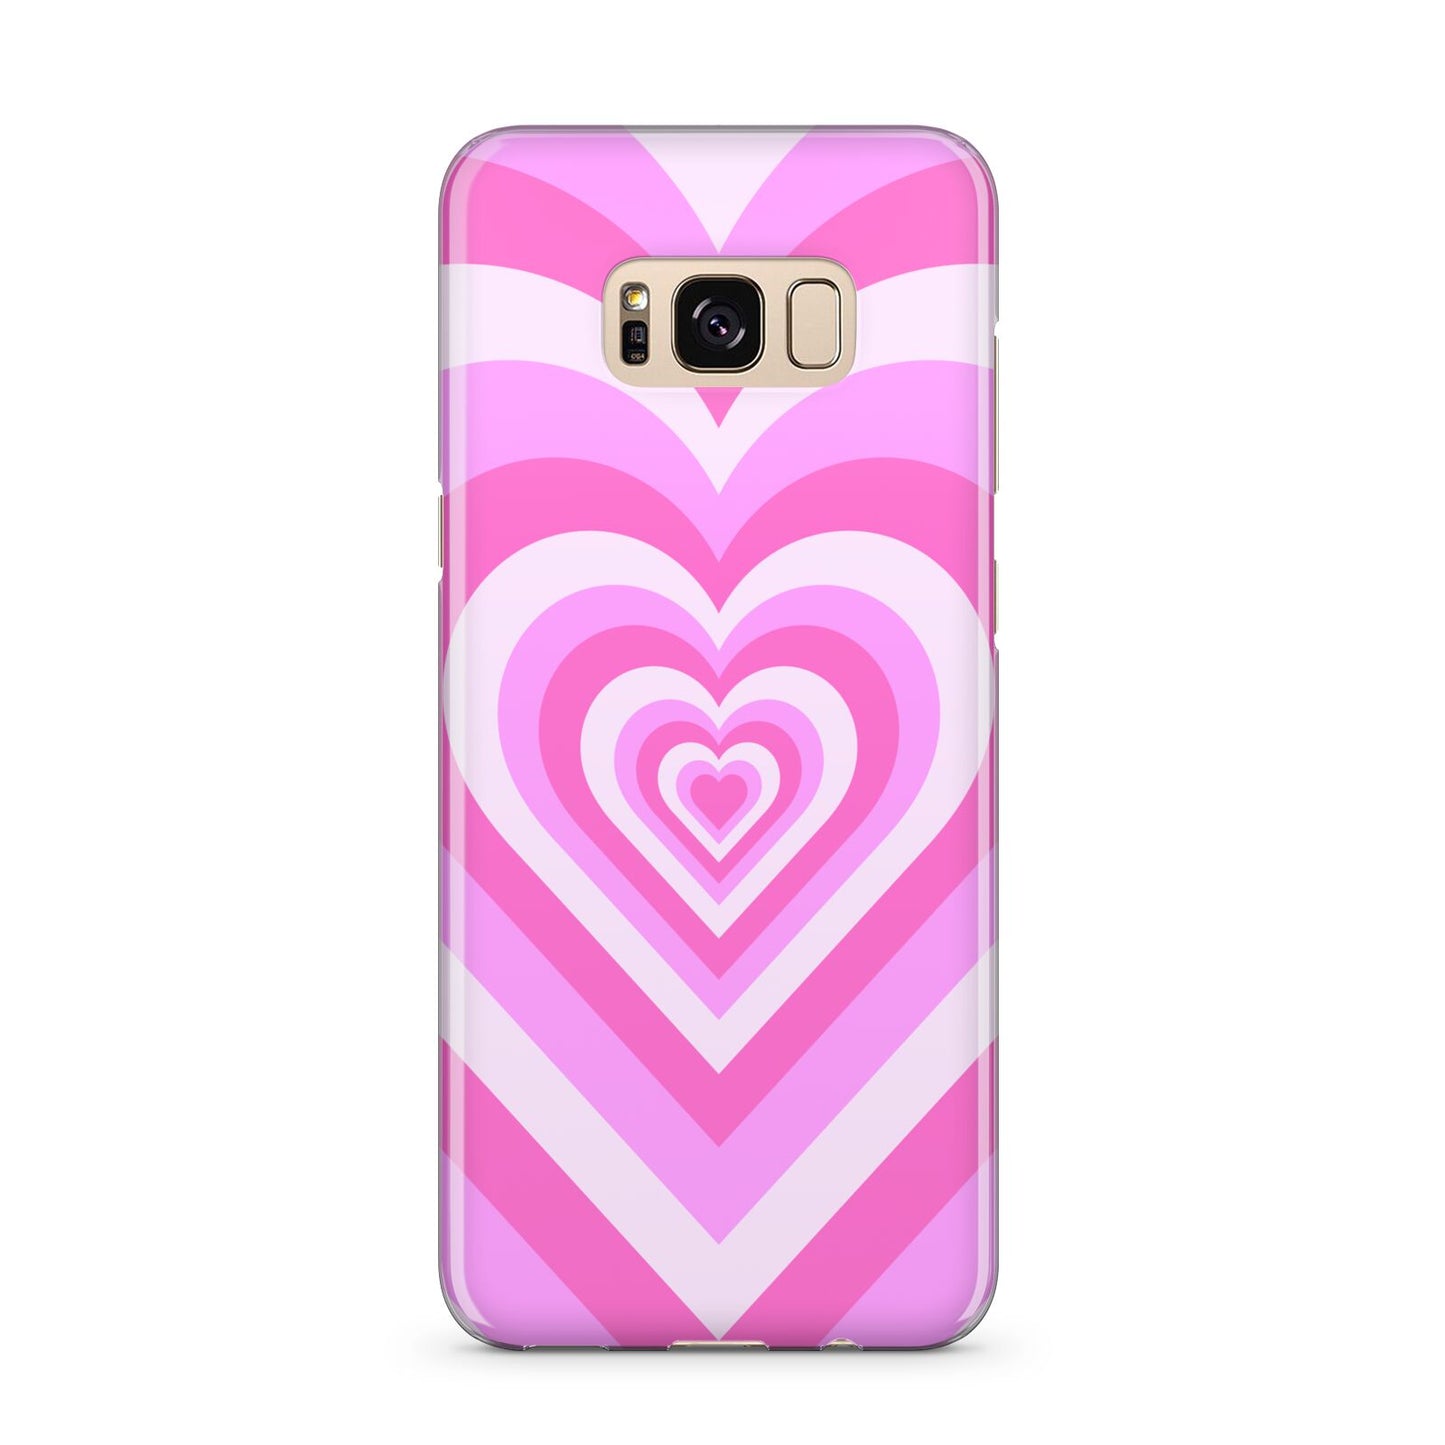 Aesthetic Heart Samsung Galaxy S8 Plus Case